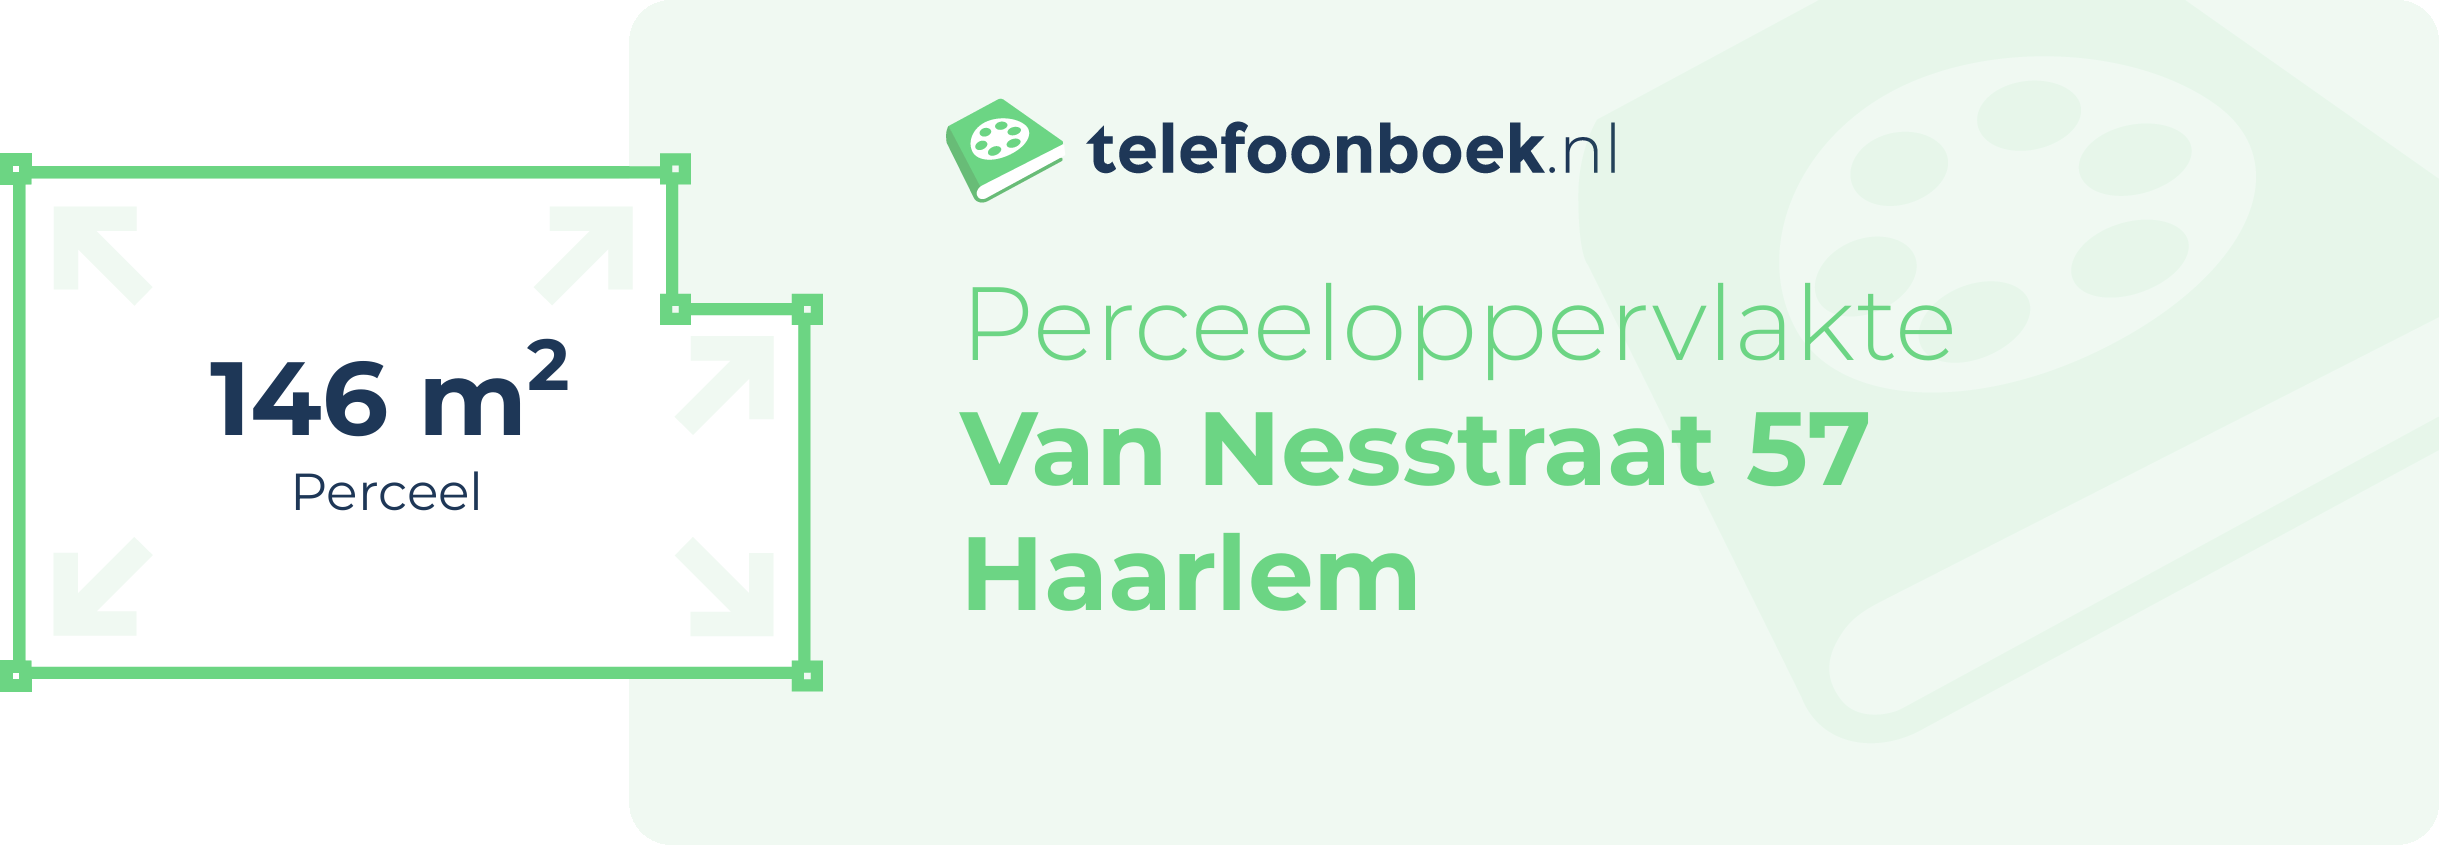 Perceeloppervlakte Van Nesstraat 57 Haarlem